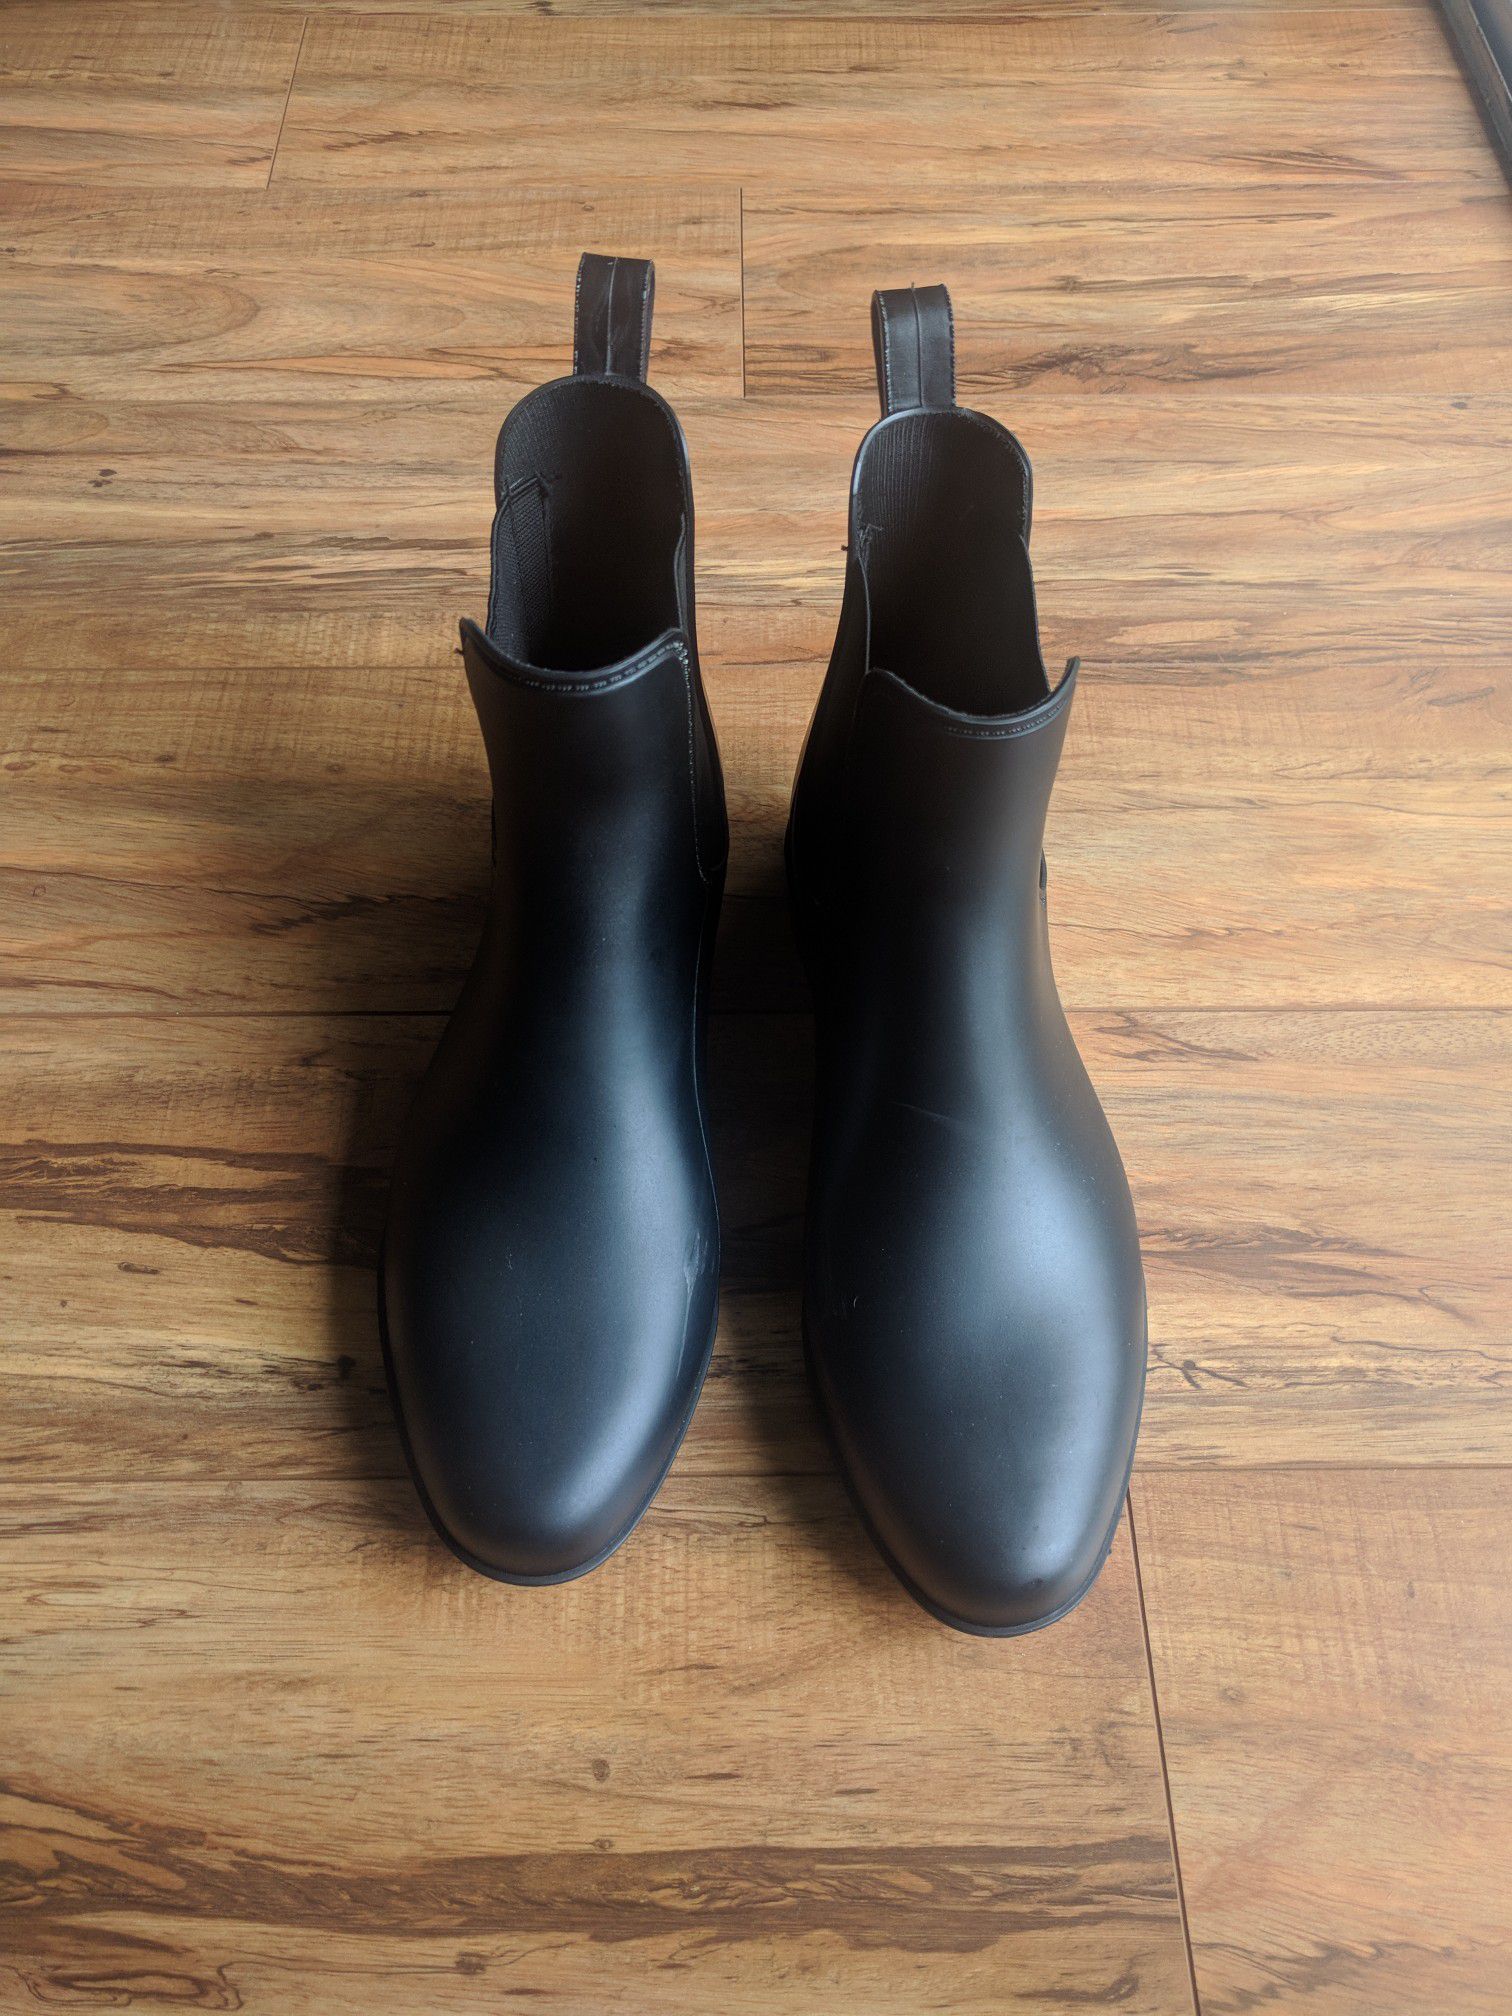 Ankle length rain boots, size 9 womens, black